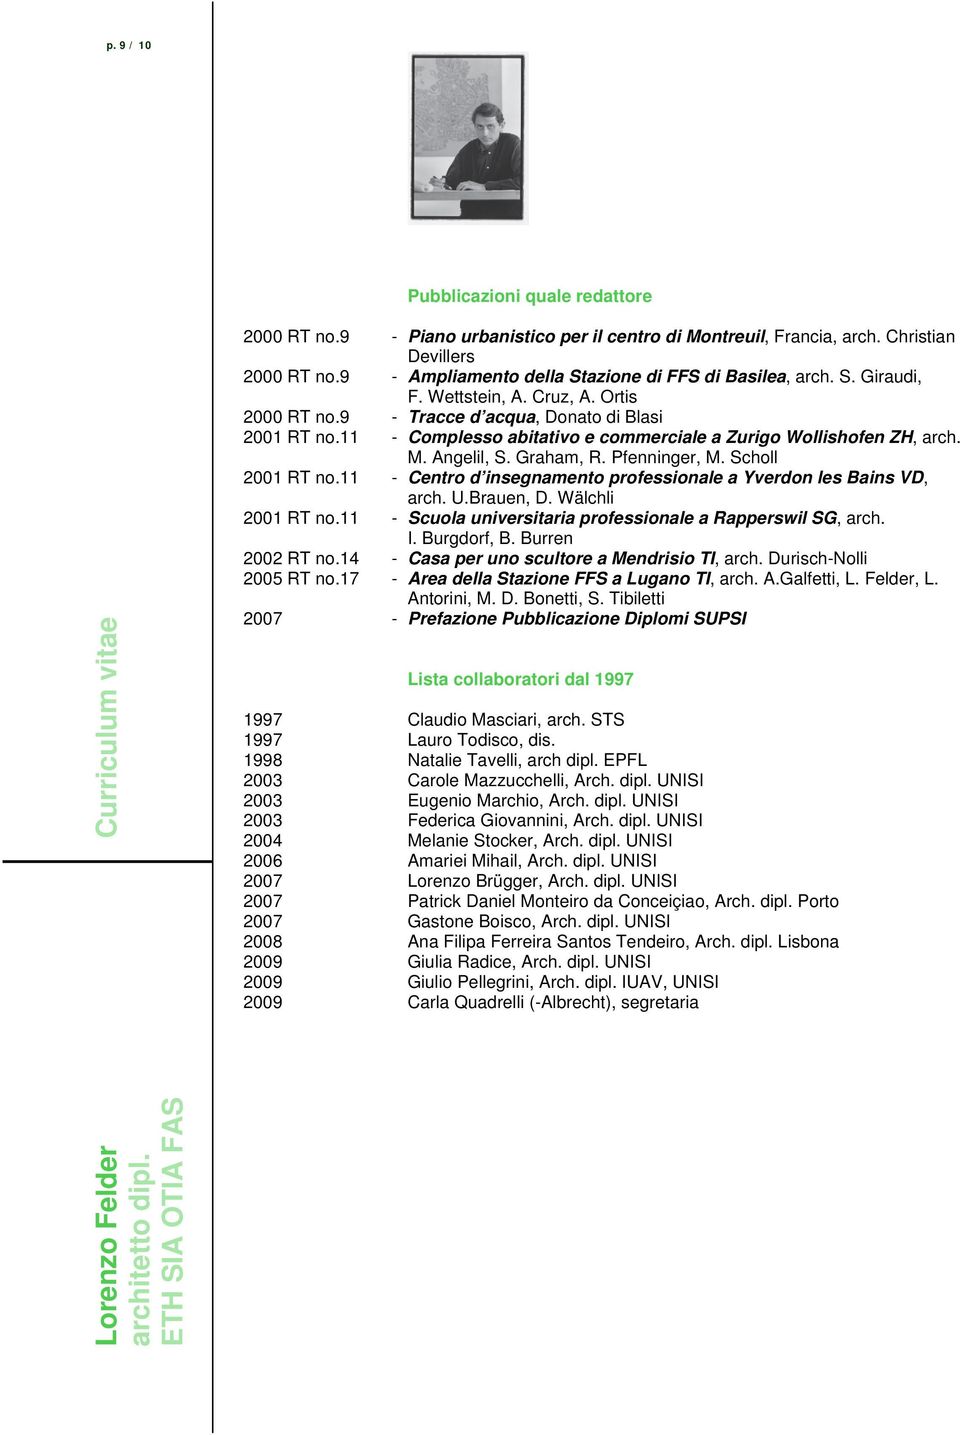 11 - Complesso abitativo e commerciale a Zurigo Wollishofen ZH, arch. M. Angelil, S. Graham, R. Pfenninger, M. Scholl 2001 RT no.11 - Centro d insegnamento professionale a Yverdon les Bains VD, arch.